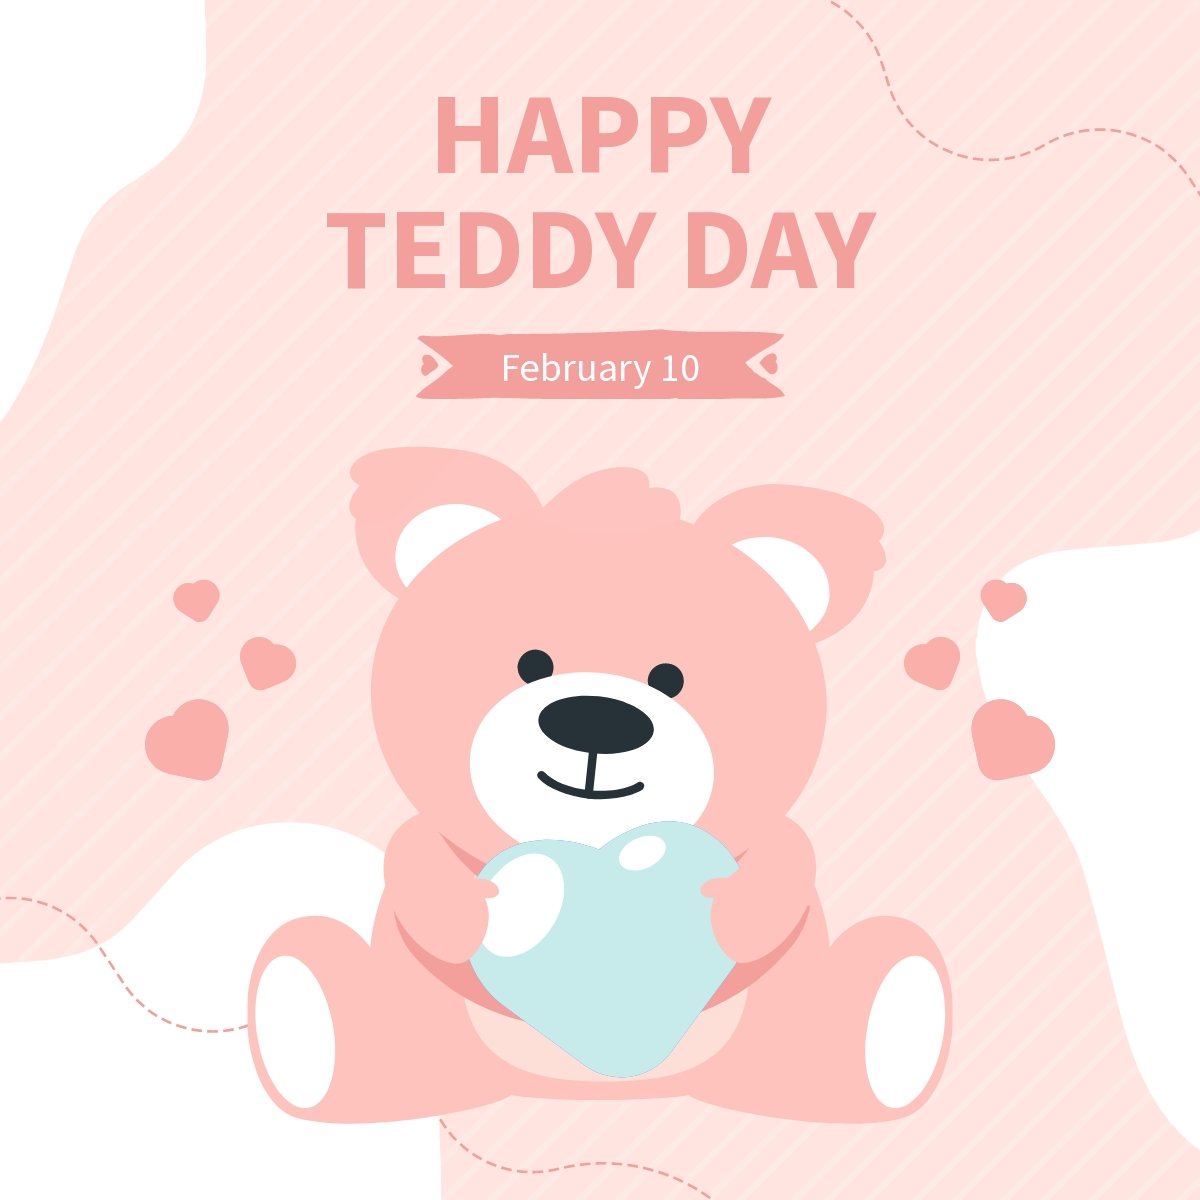 Happy Teddy Day Linkedin Post